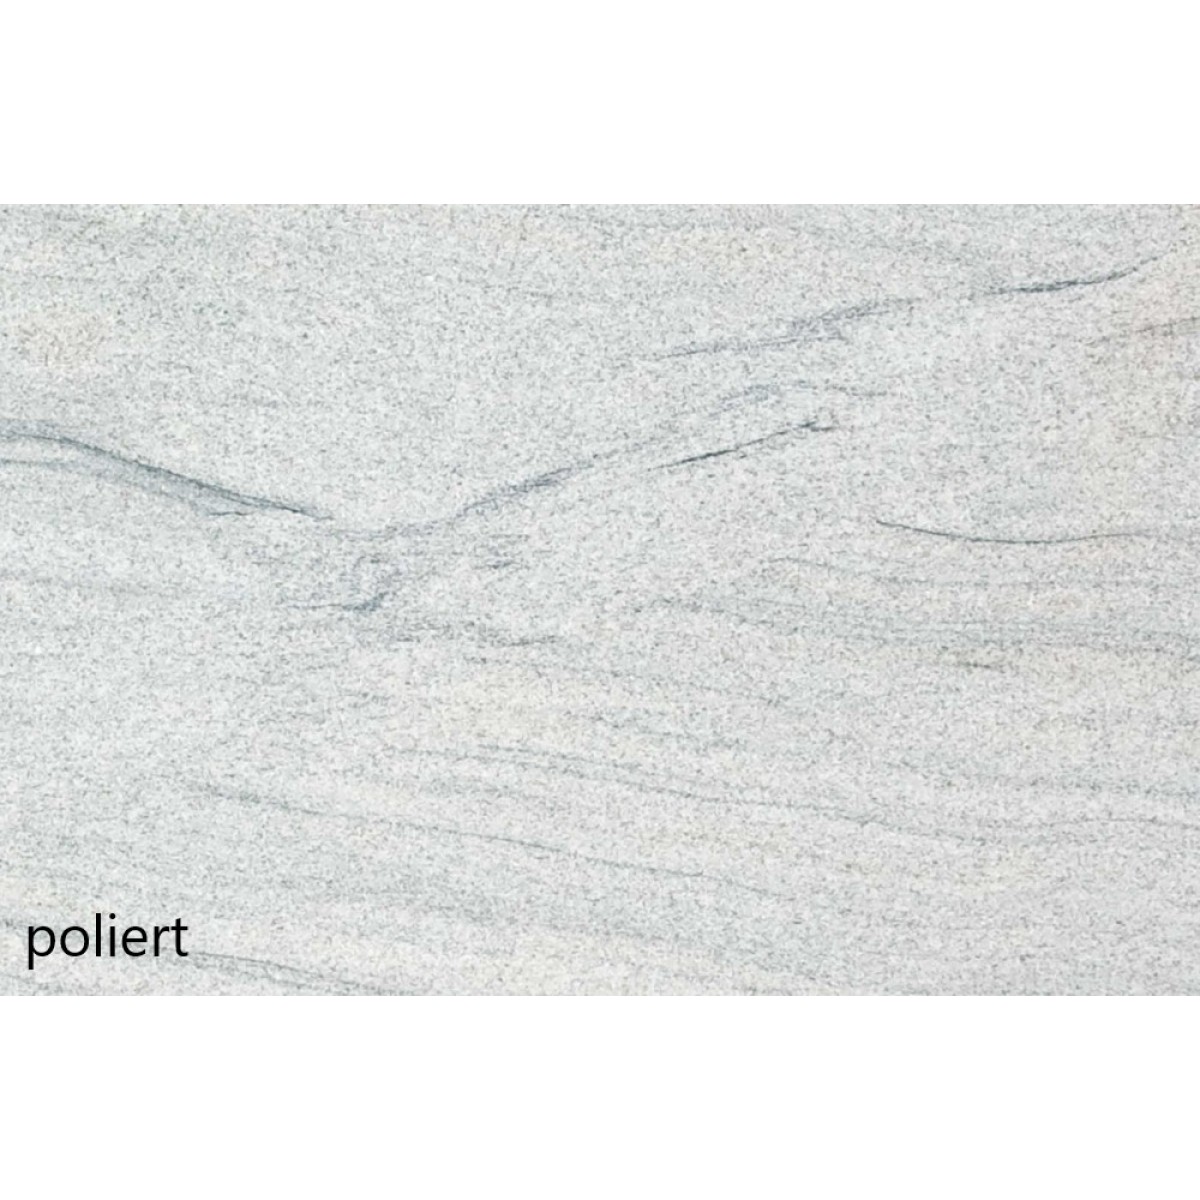 Imperial White poliert, Granit